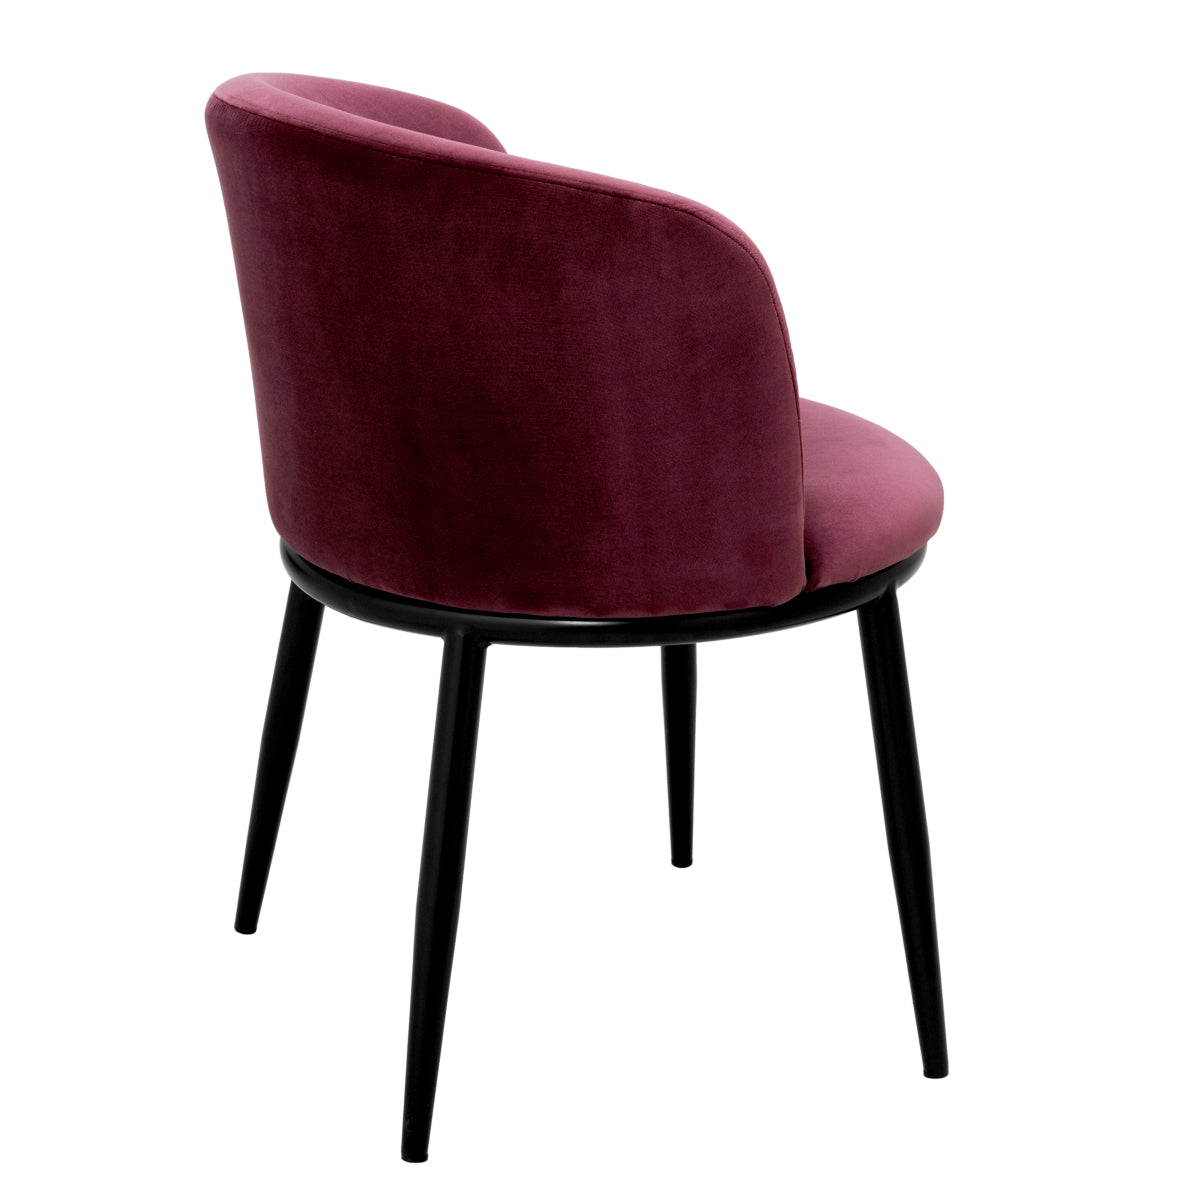 Dining chair Eichholtz Filmore cameron purple